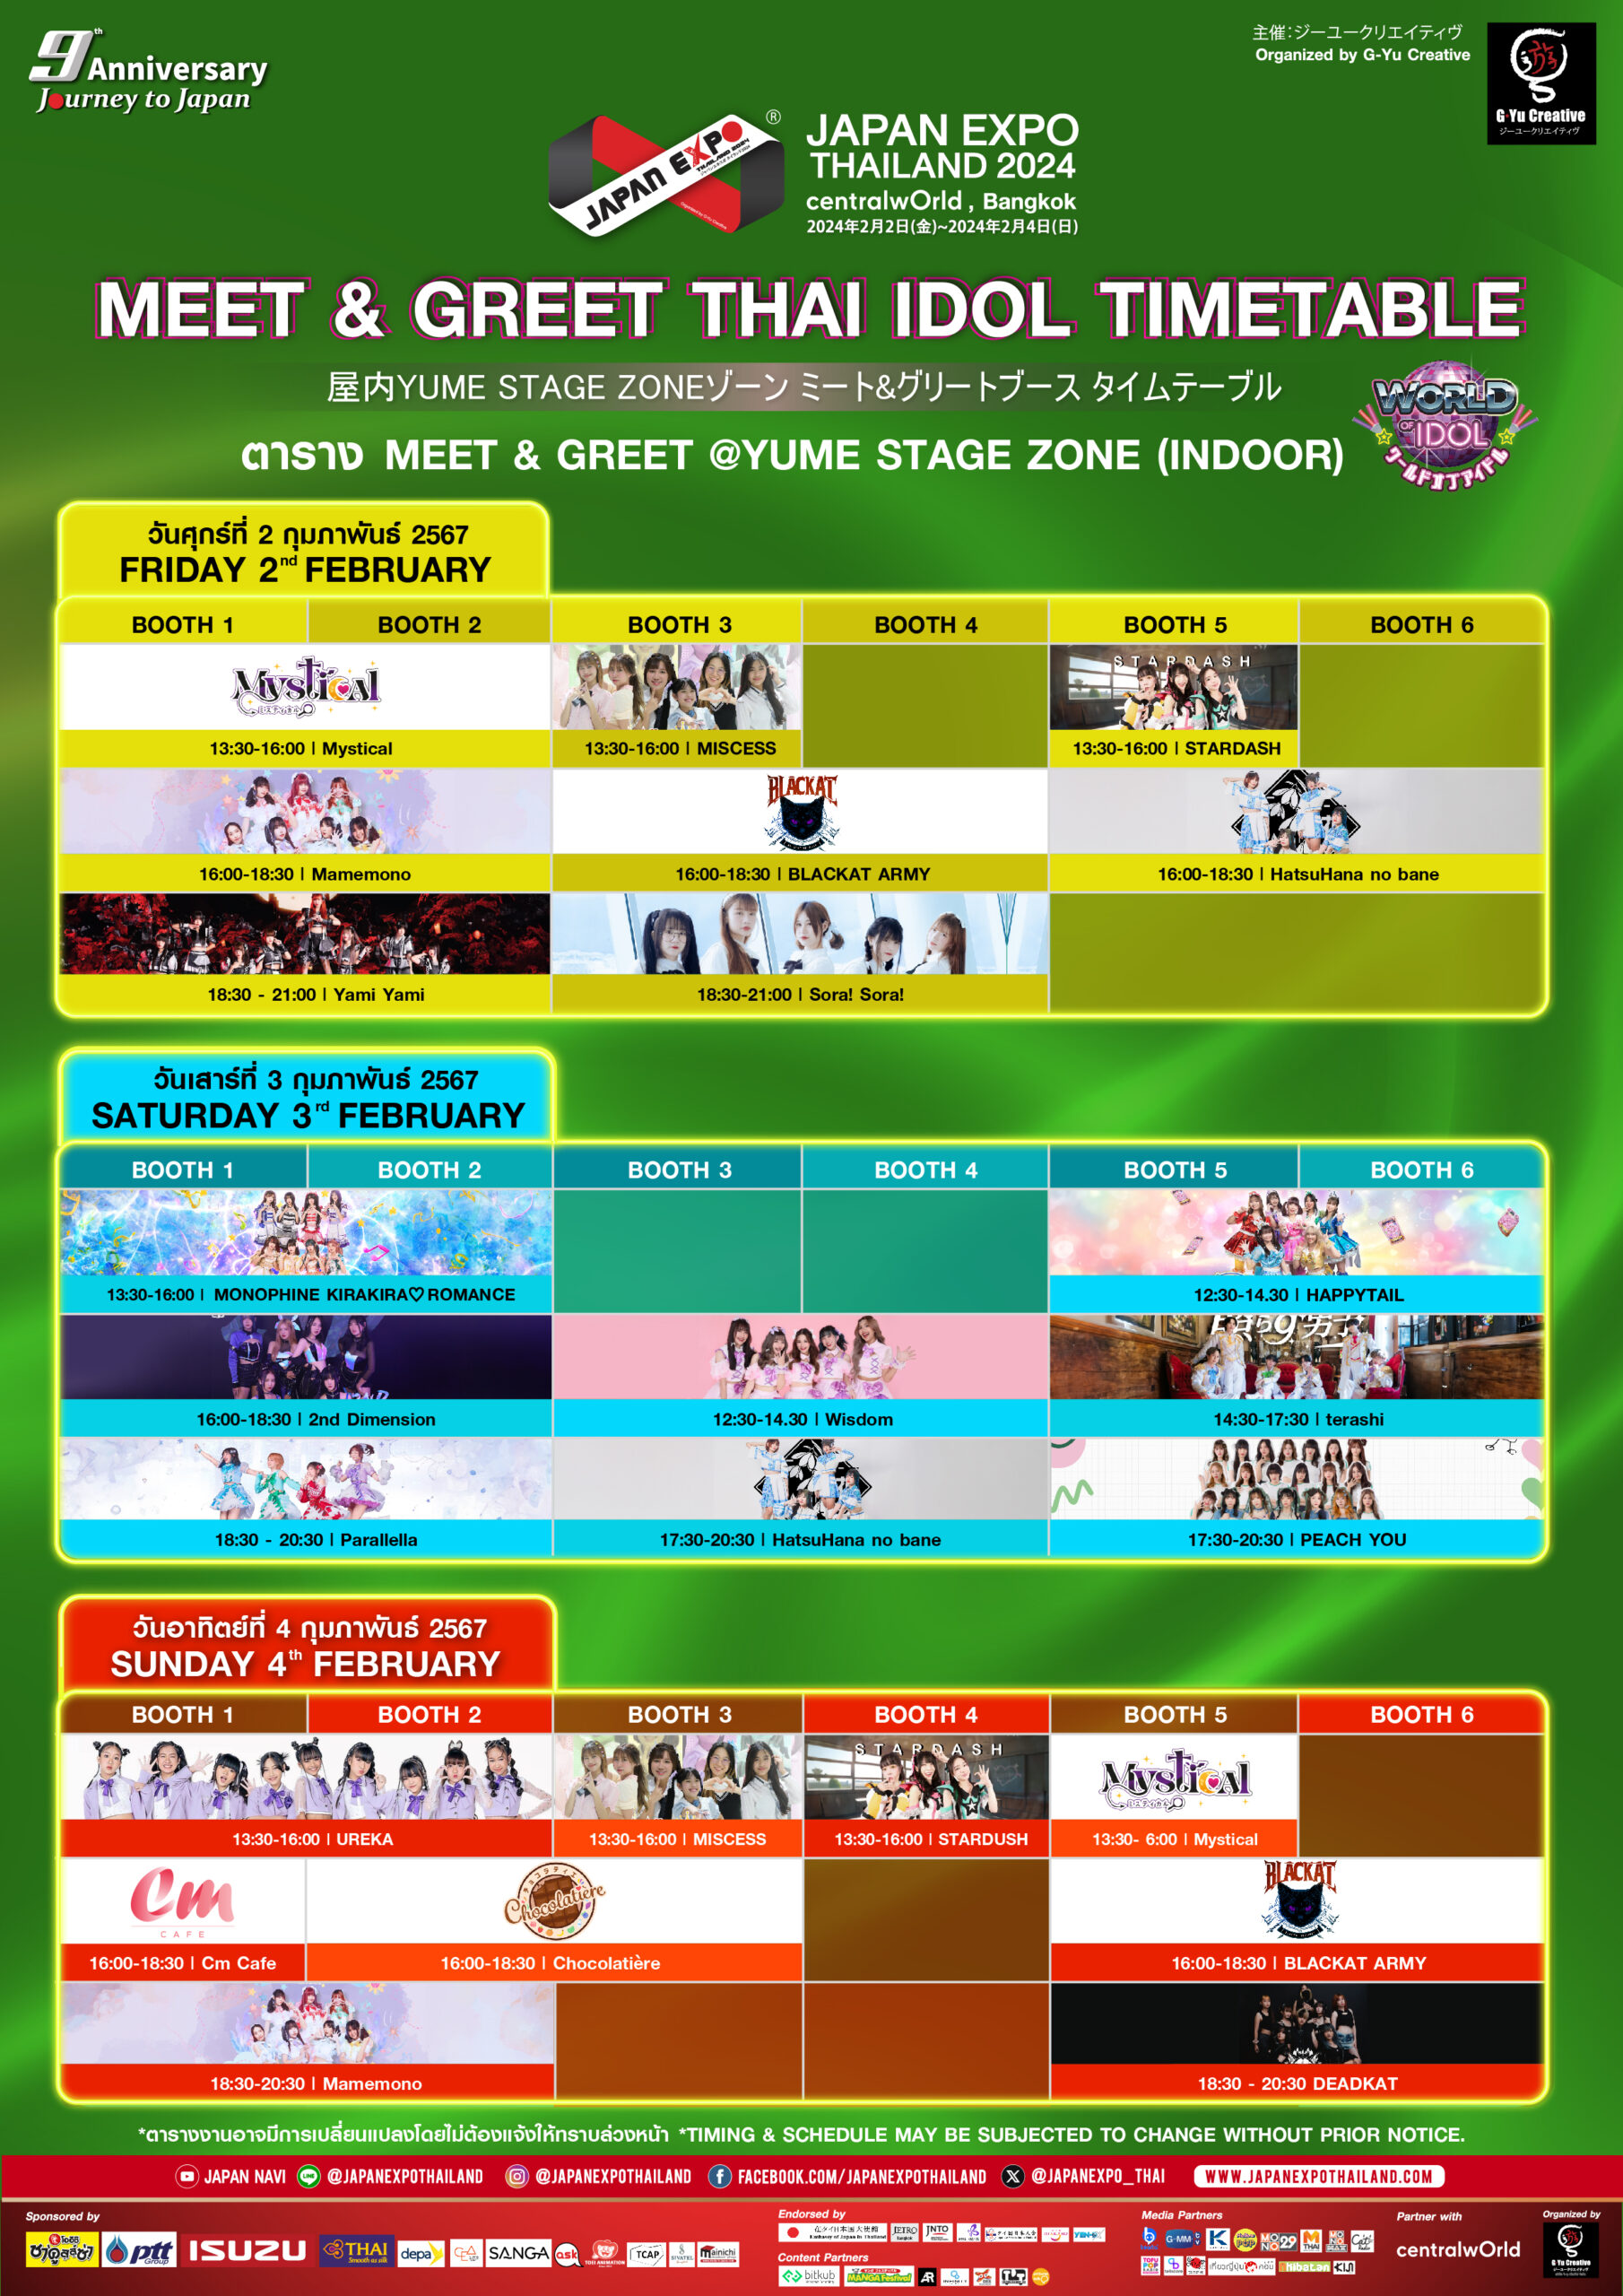 Timetable Meet & Greet Thai Idol Yume Stage Zone (indoor) 01